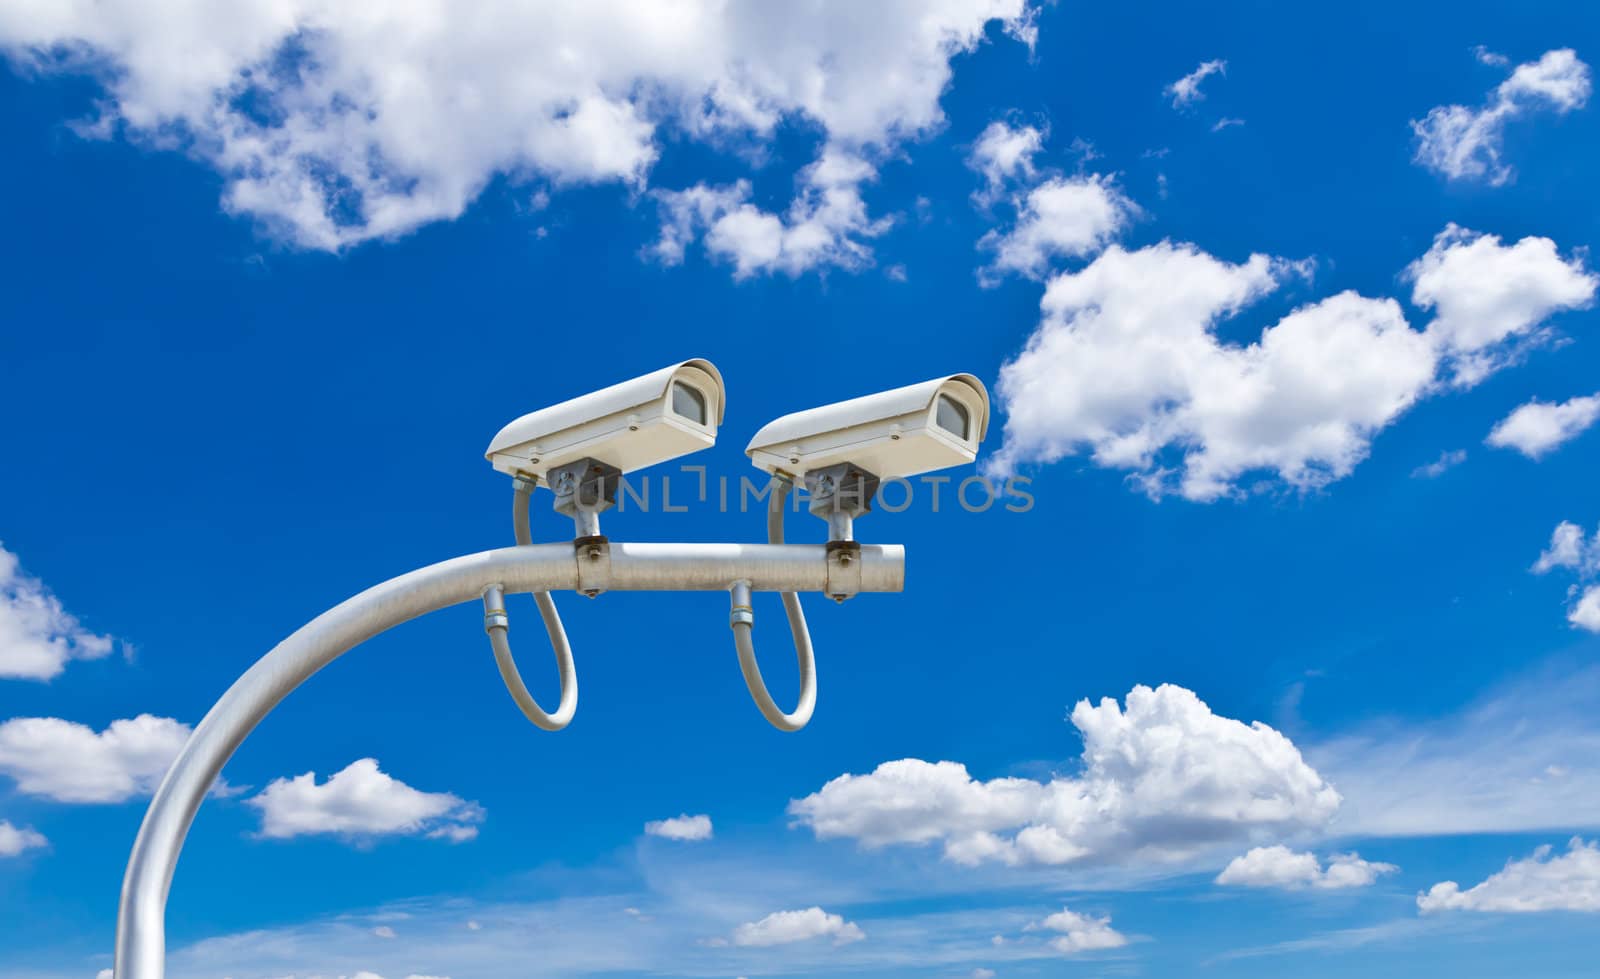 surveillance cameras against blue sky by tungphoto